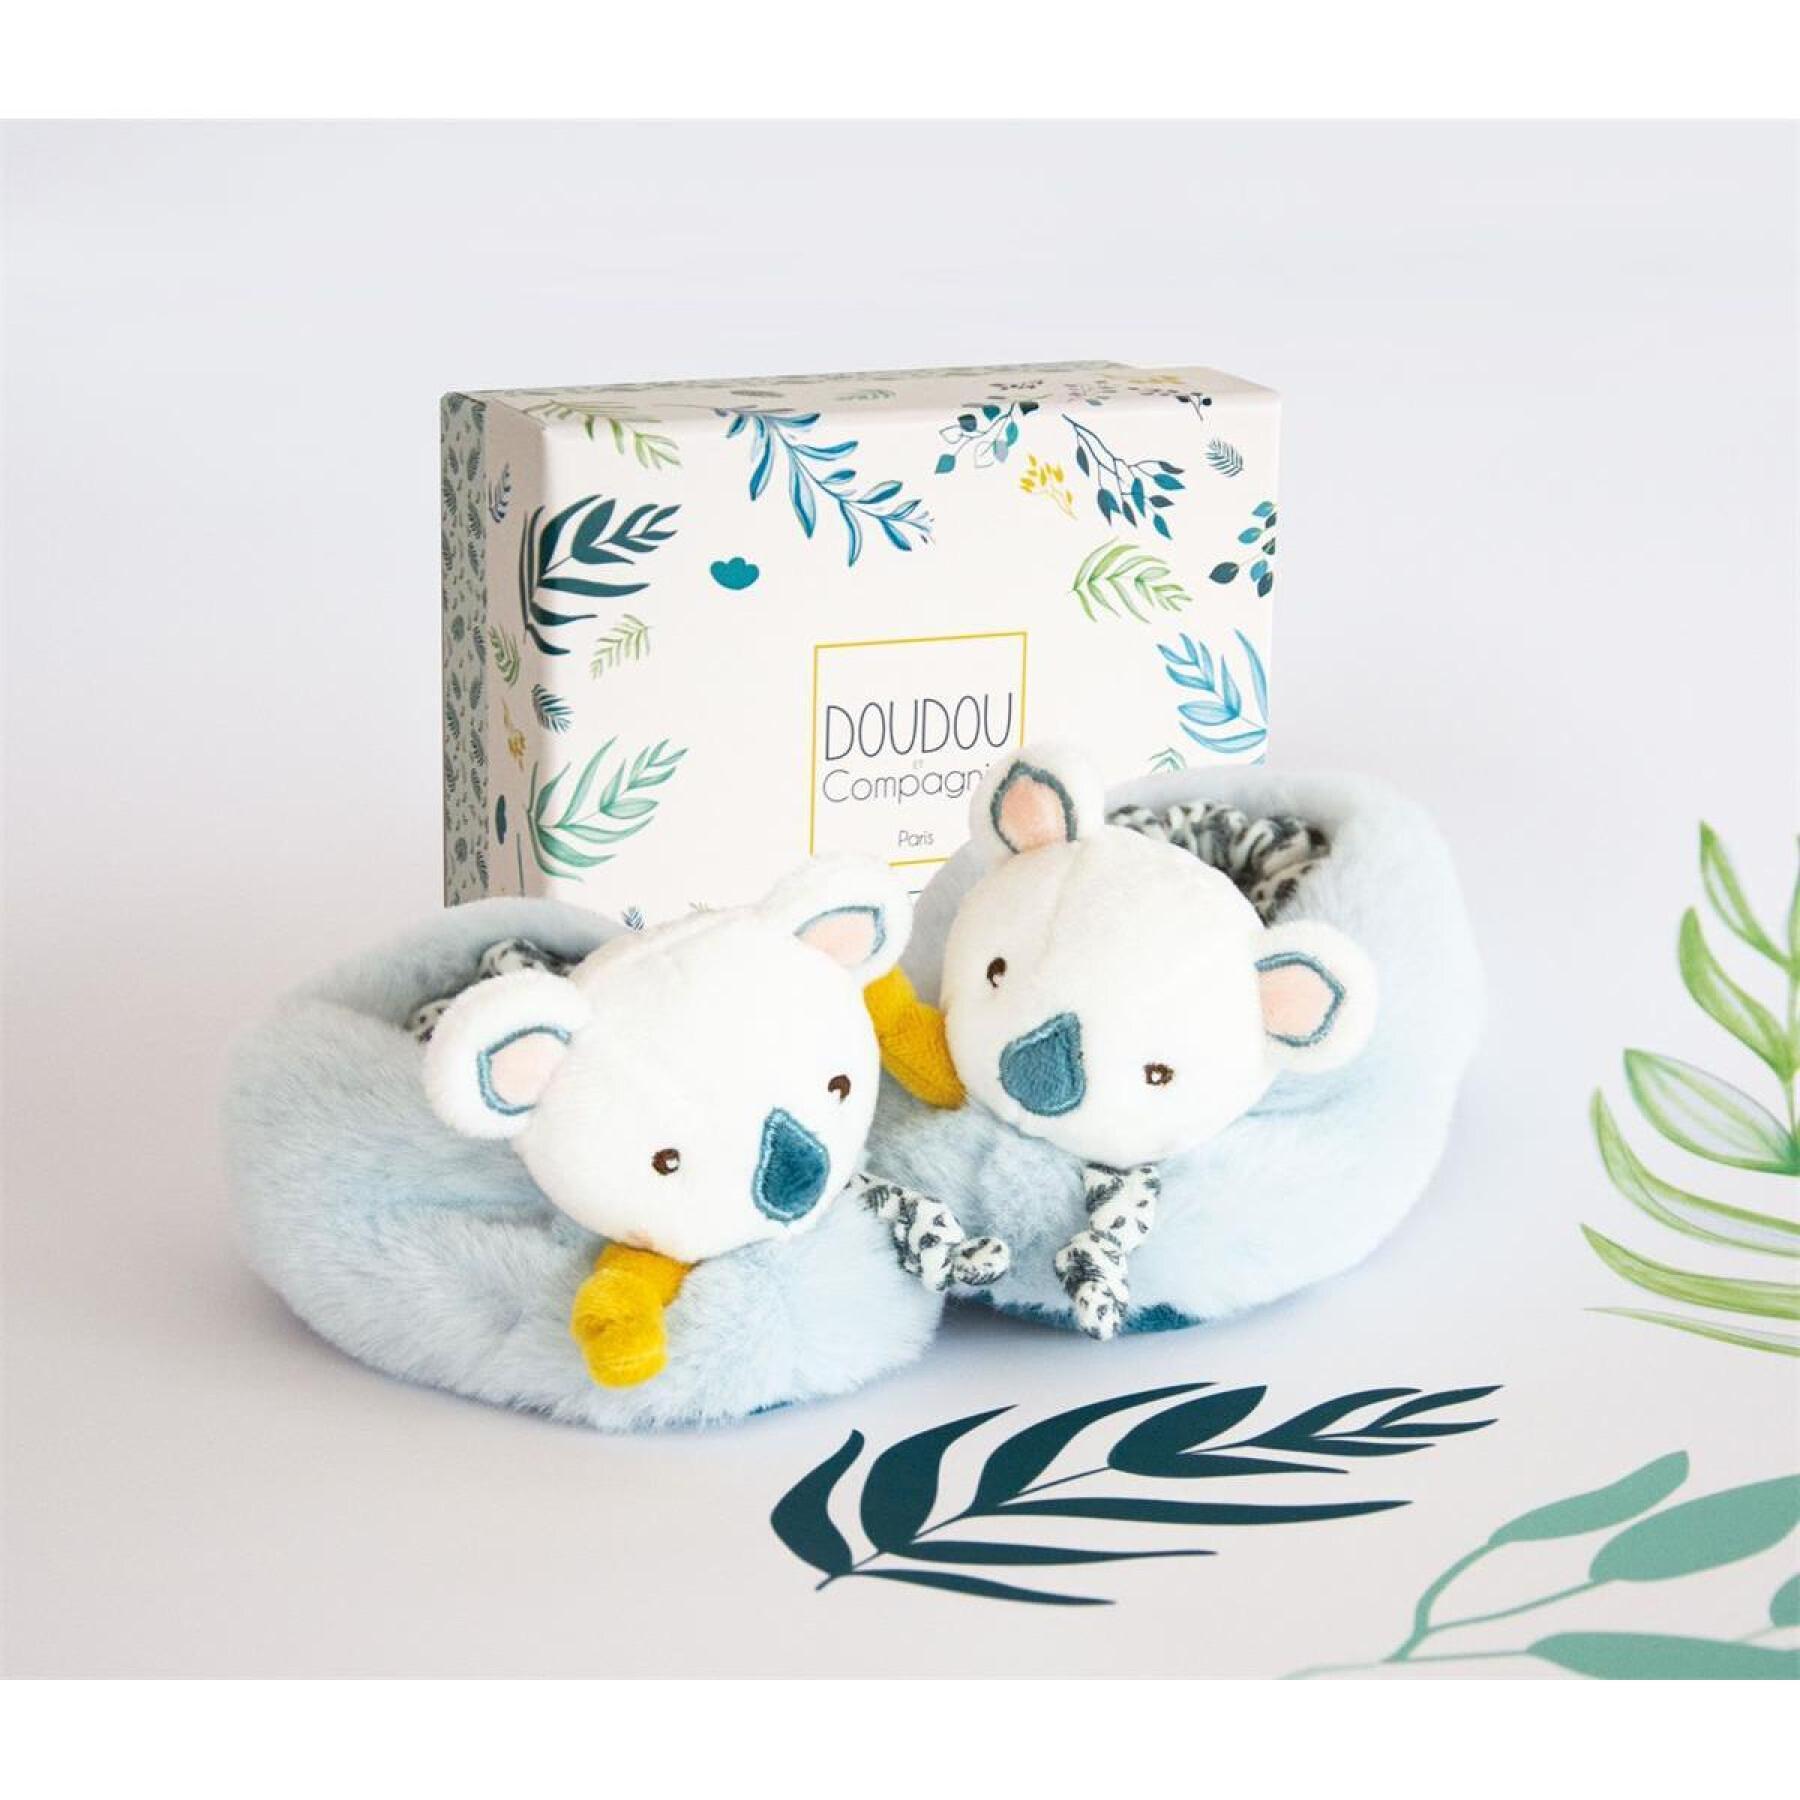 Zapatillas de bebé Doudou & compagnie Yoca Le Koala